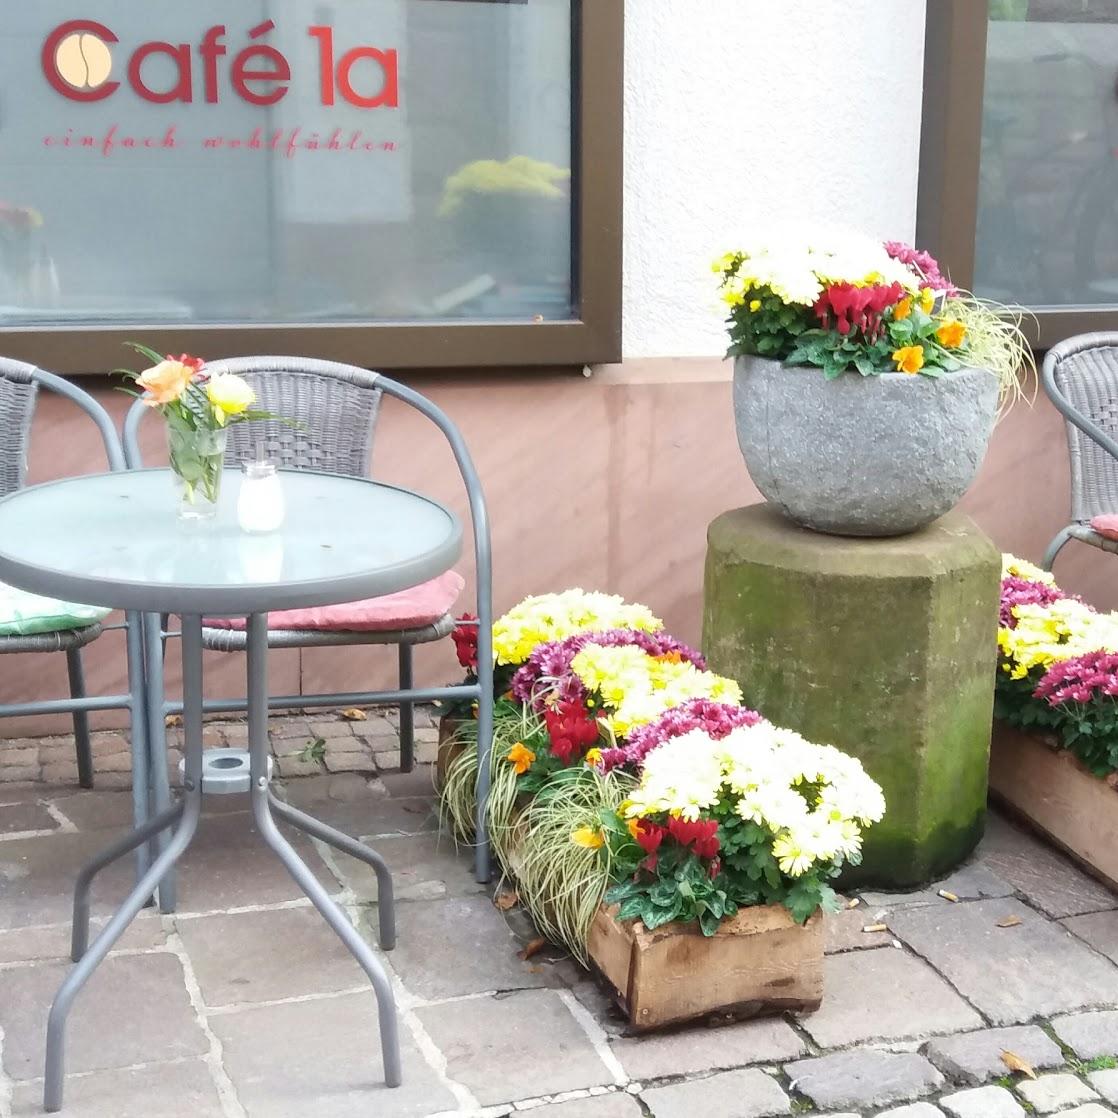 Restaurant "Café 1a - Bucherer Ovalle GbR" in Lahr-Schwarzwald